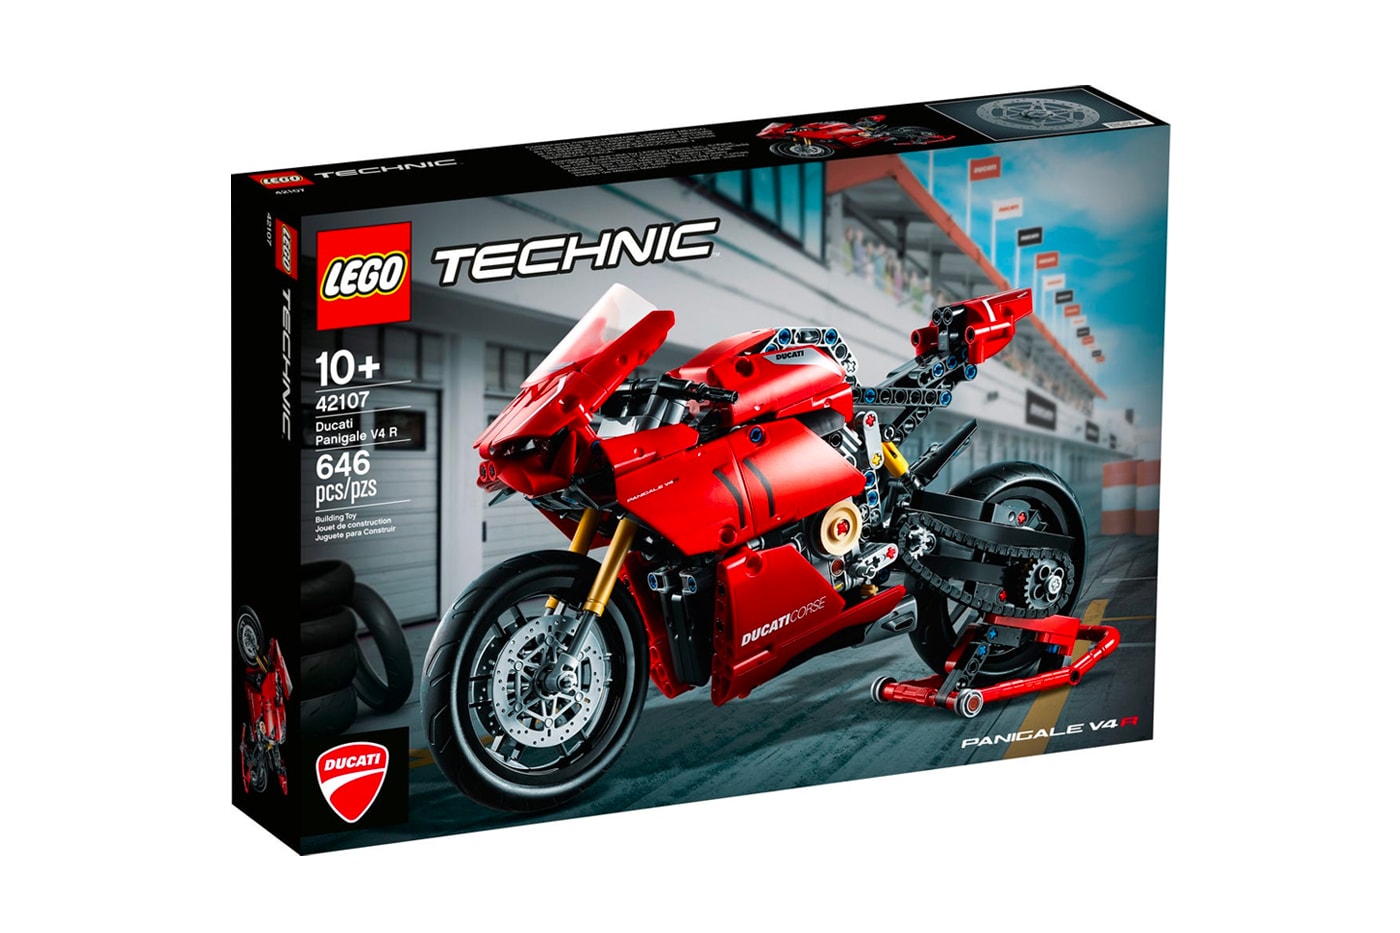 Lego Technic Ducati Panigale V4 R Release figures Bikes Motorcycles Italian Racing Red Blocks Toys Design Ducati Design Center